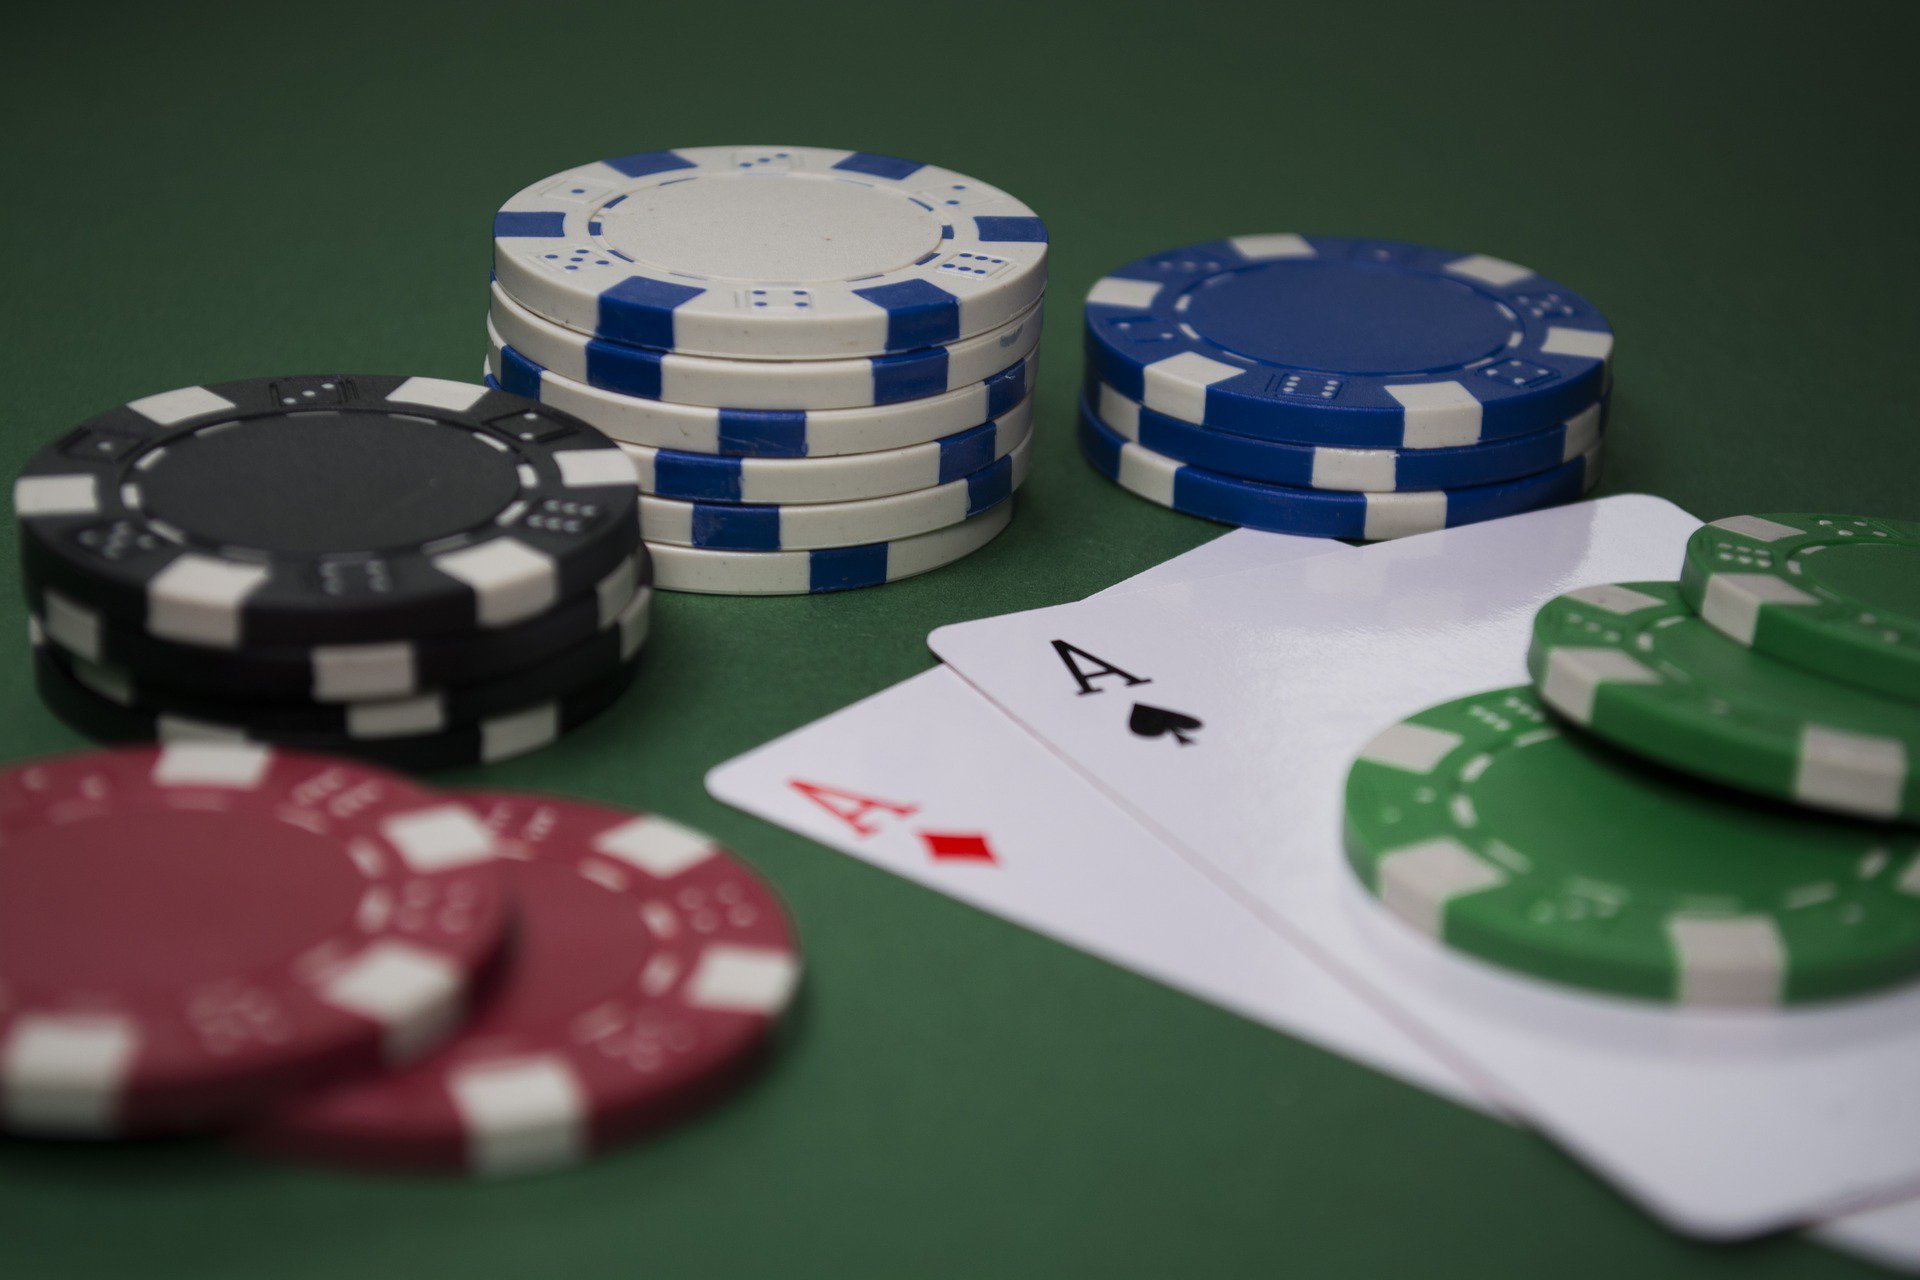 Jean-Robert Bellande Proves to Be a Tough Opponent for Garrett Adelstein in $335,000 Pot on High Stakes Poker